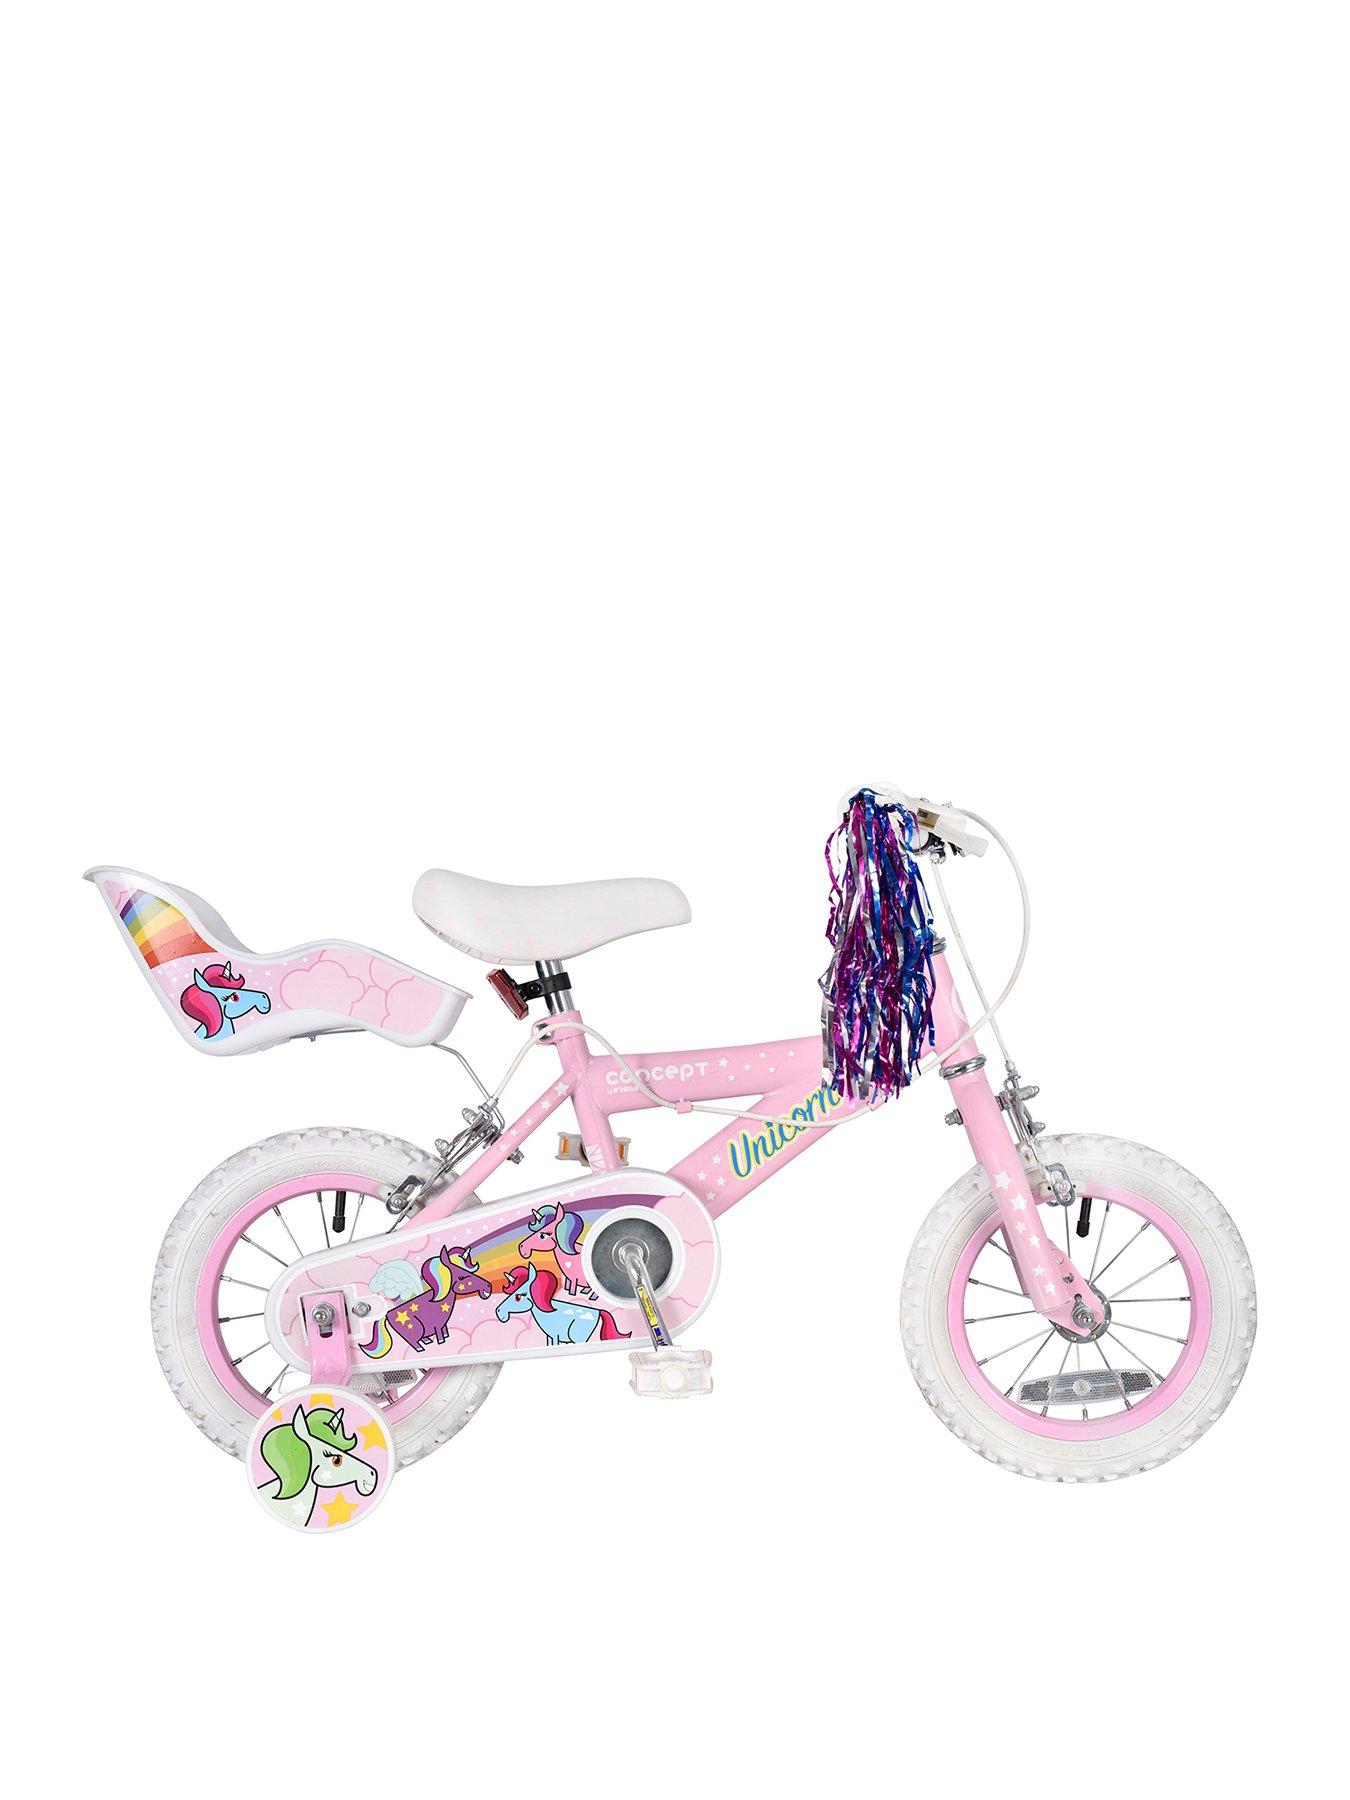 16 inch unicorn bike